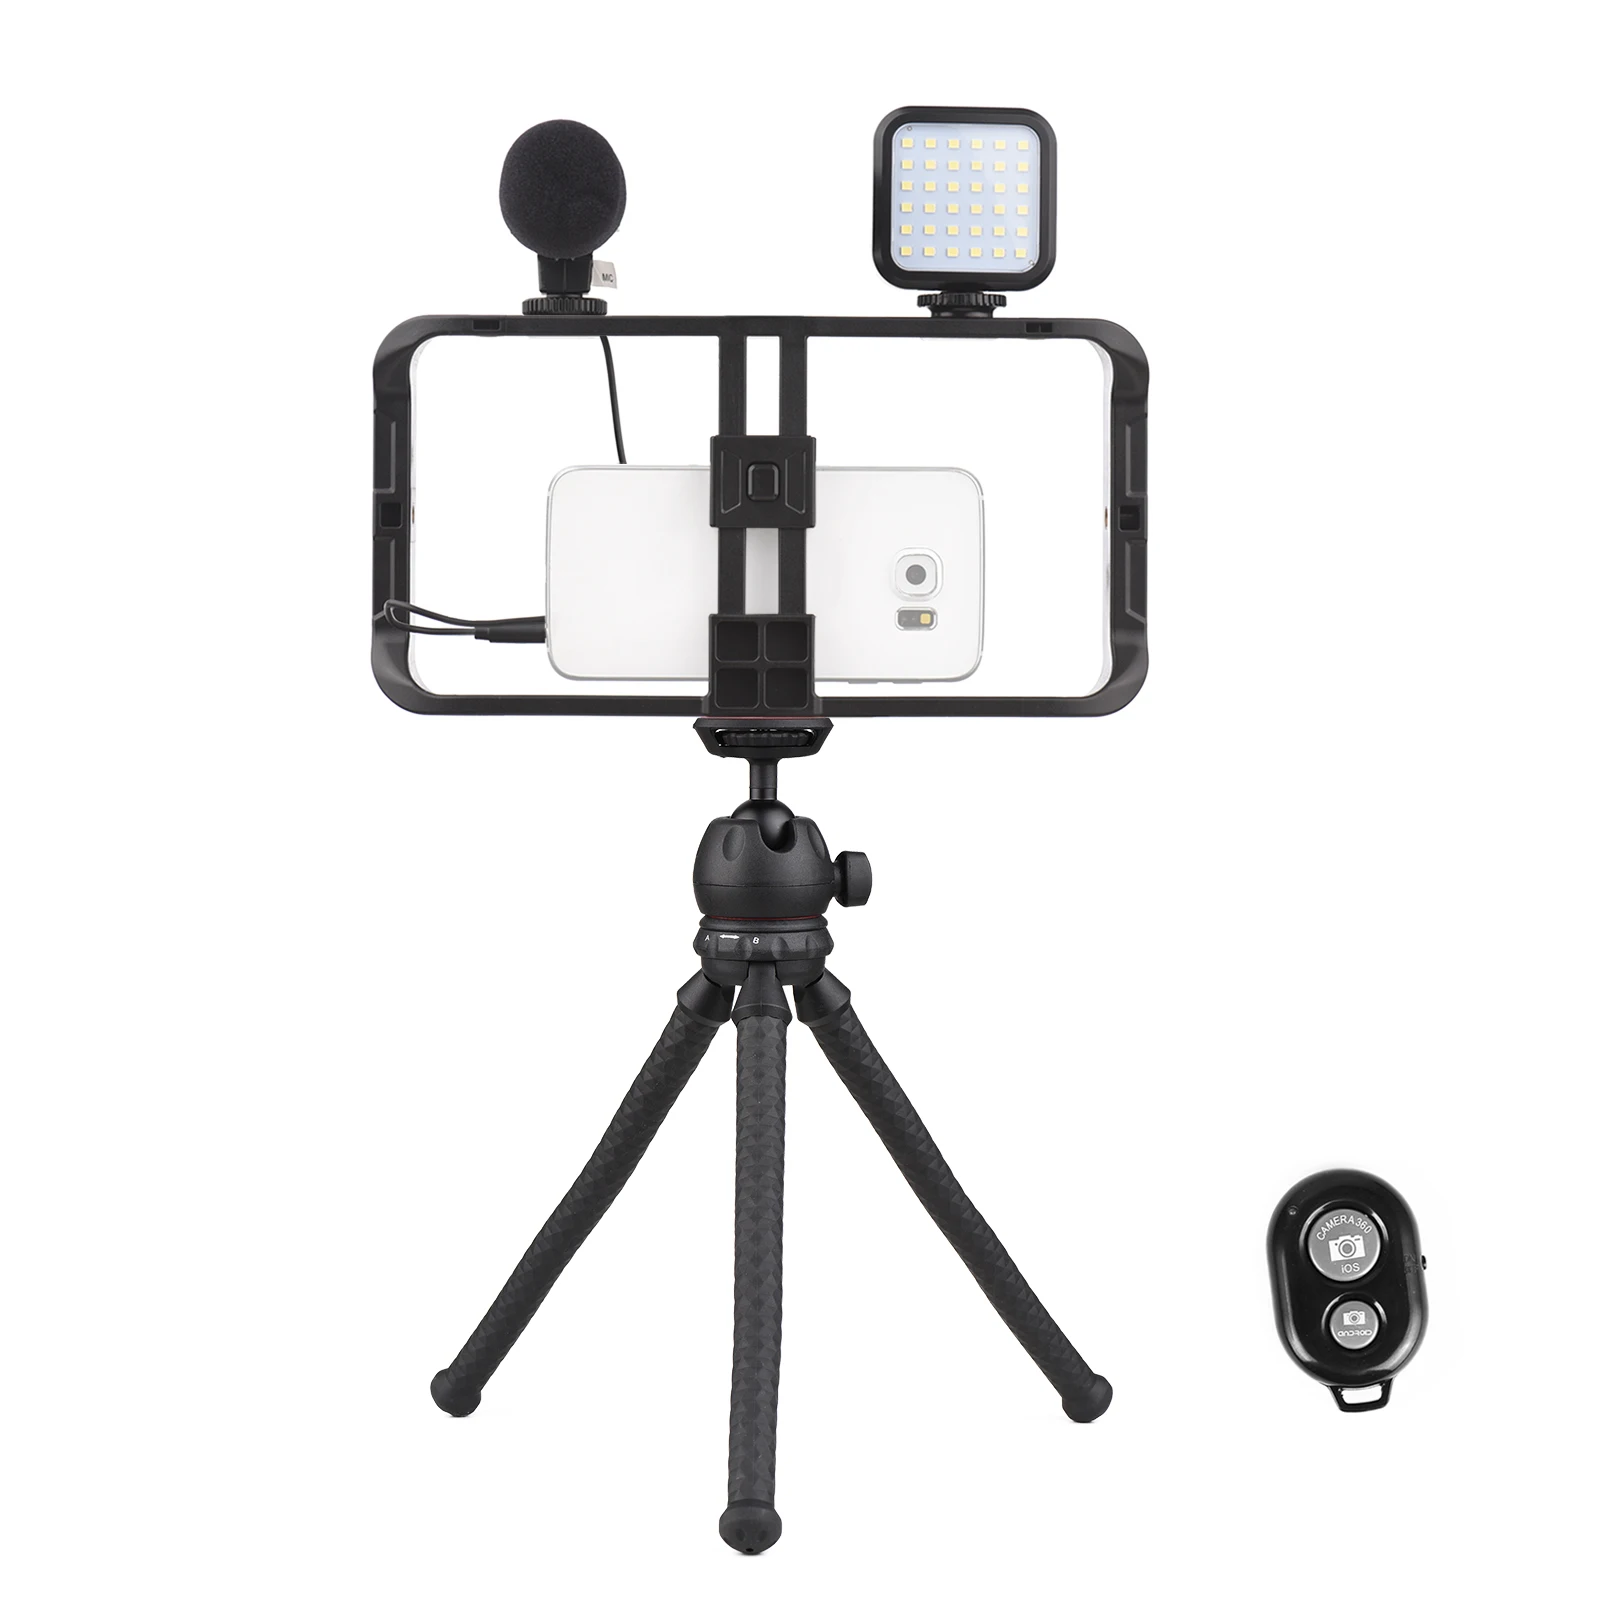 

Dual Handheld Phone Cage Vlog Smartphone Video Rig Stabilizer +Tripod LED Light+ Mic+Remote Control for Vlog Recording Making